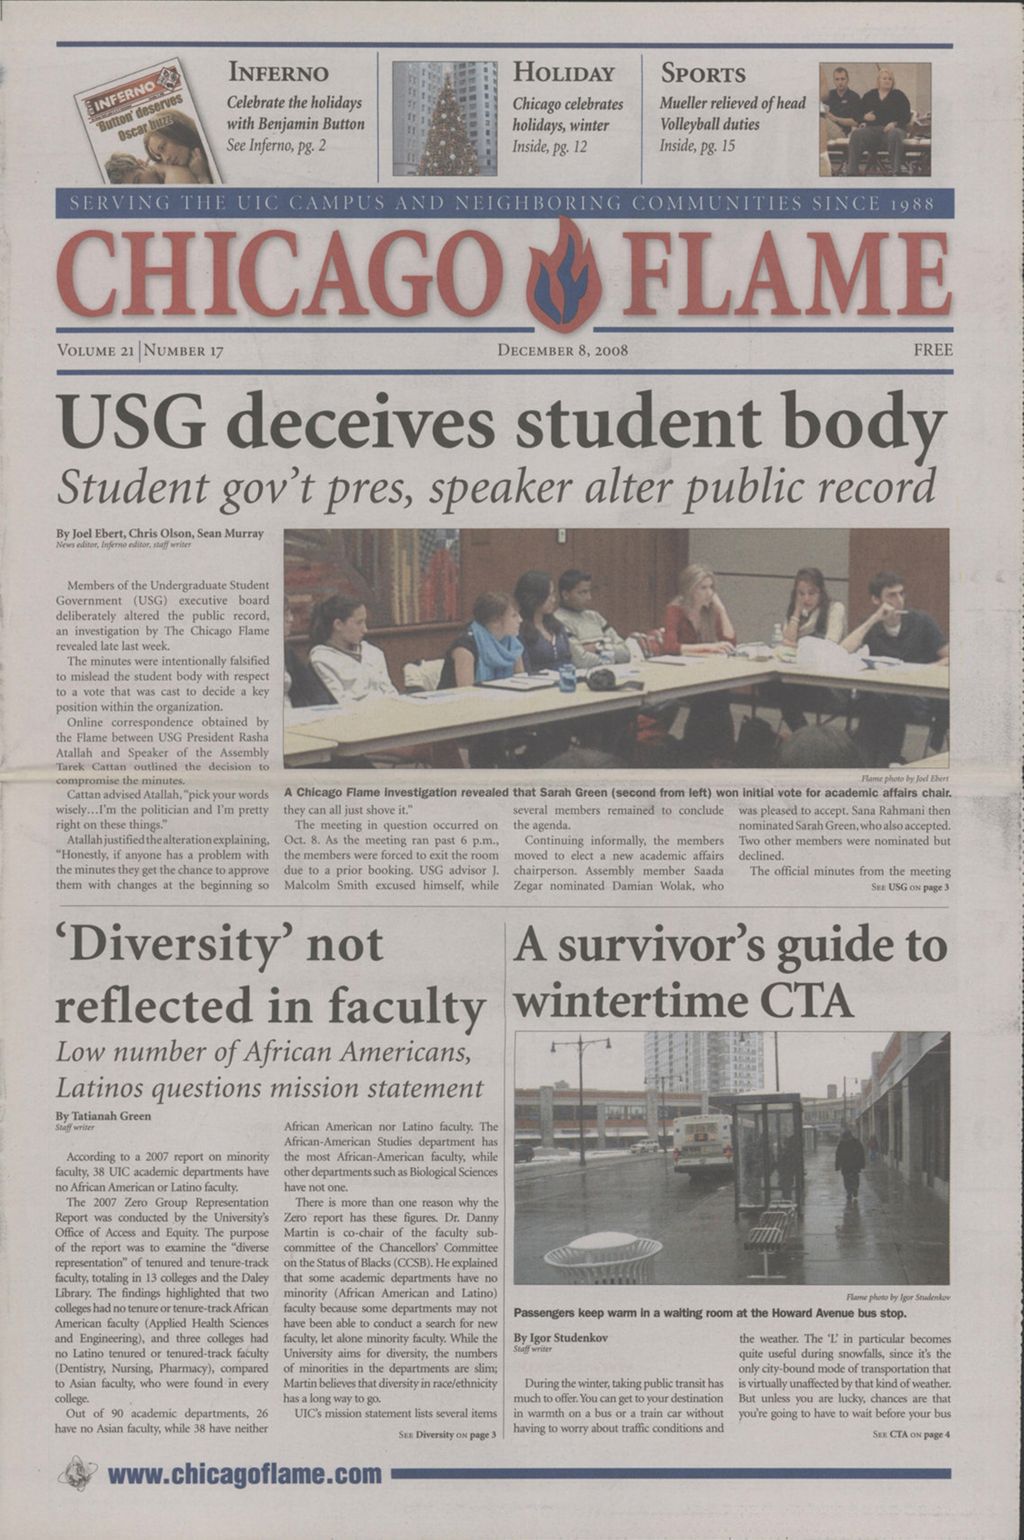 Chicago Flame (December 8, 2008)